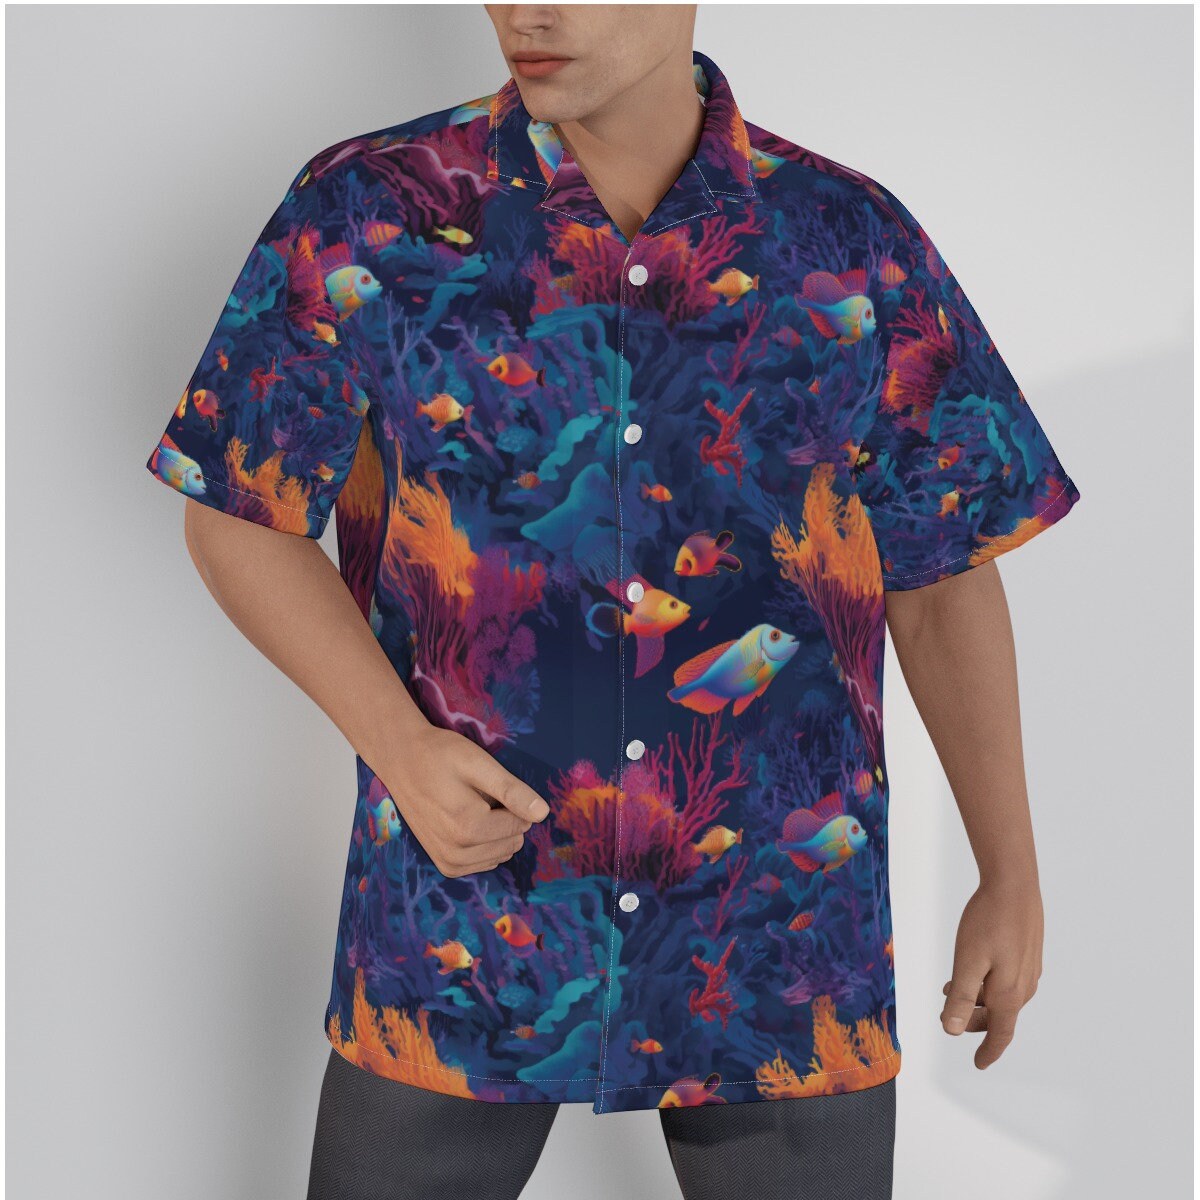 The Blue Tropical Ocean Men's Hawaiian Shirt